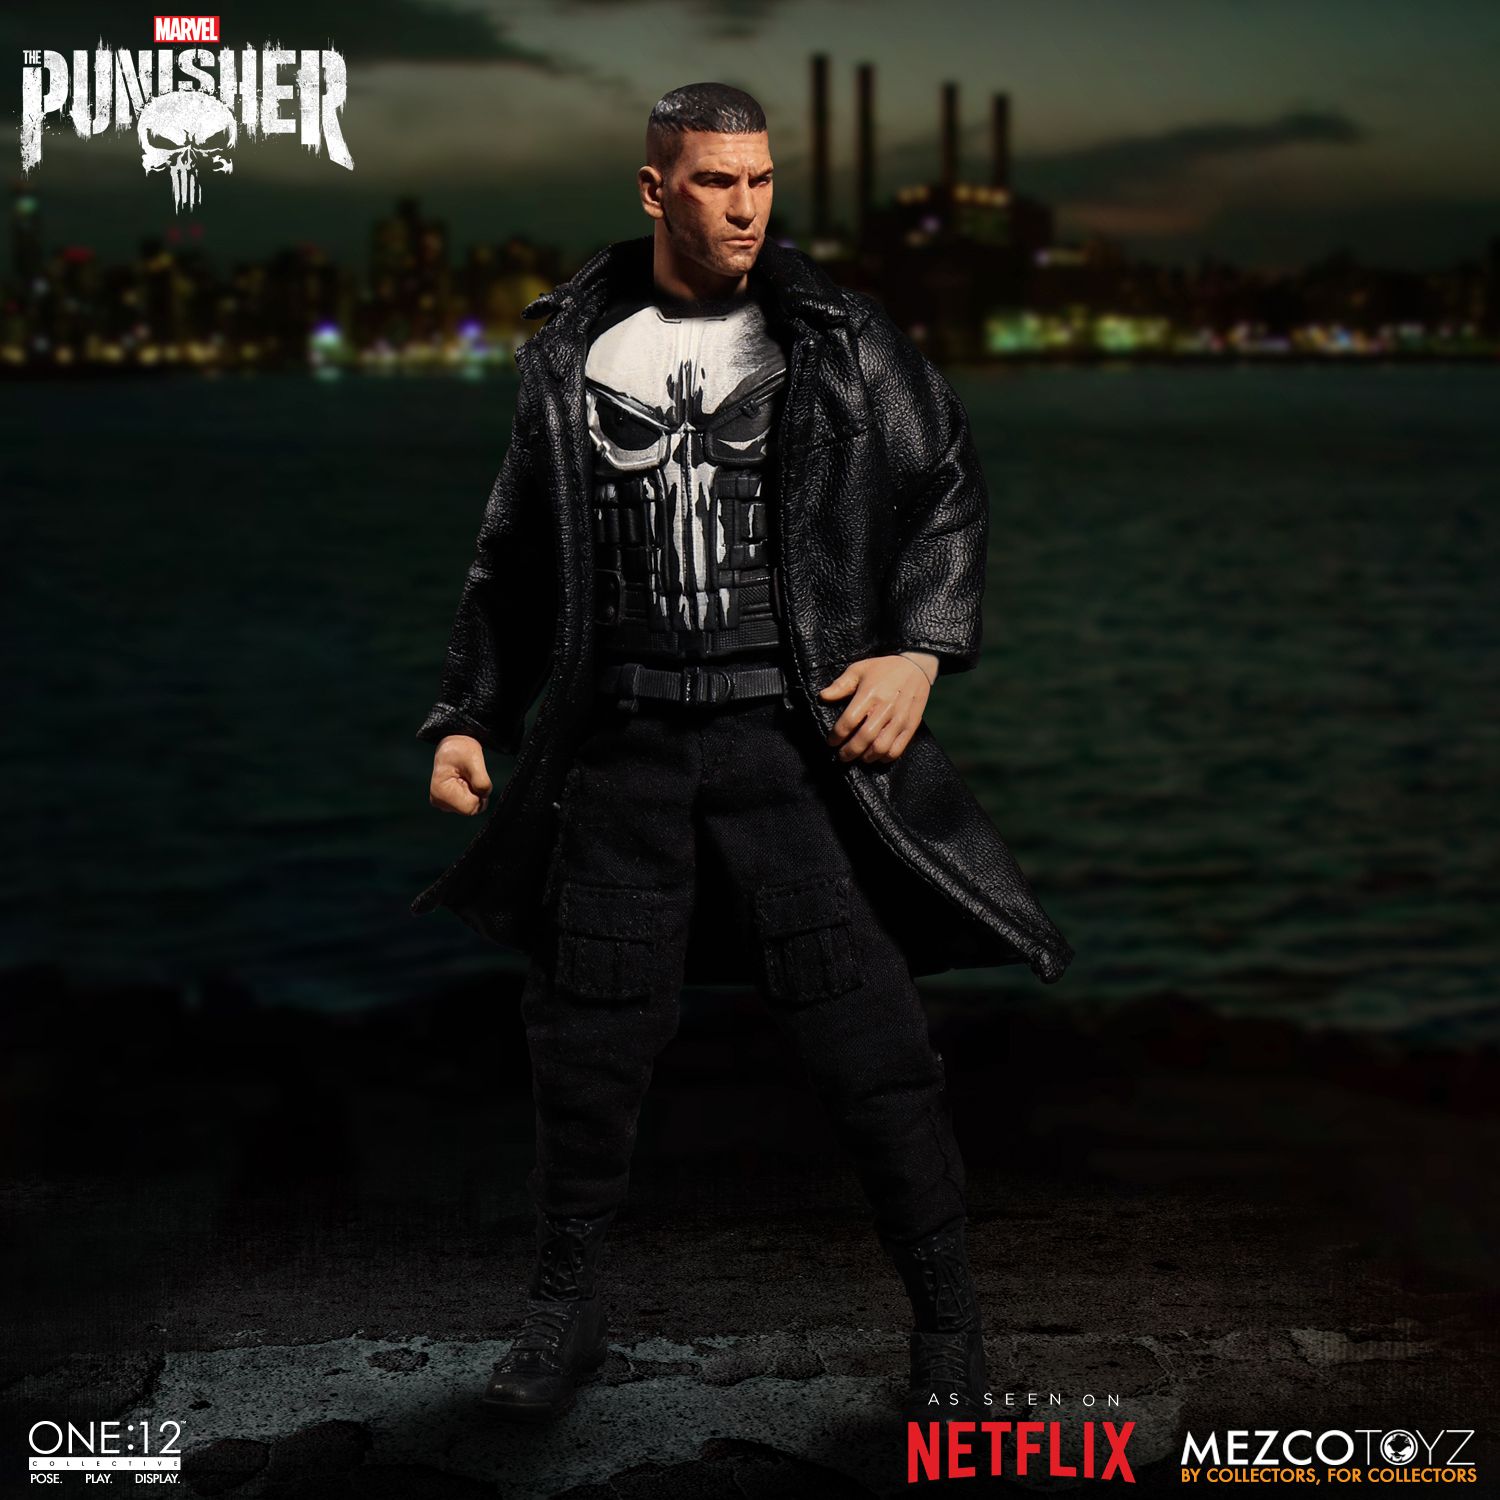 Mezco-One12-Collective-Marvel-Netflix-Punisher-Promo-09.jpg